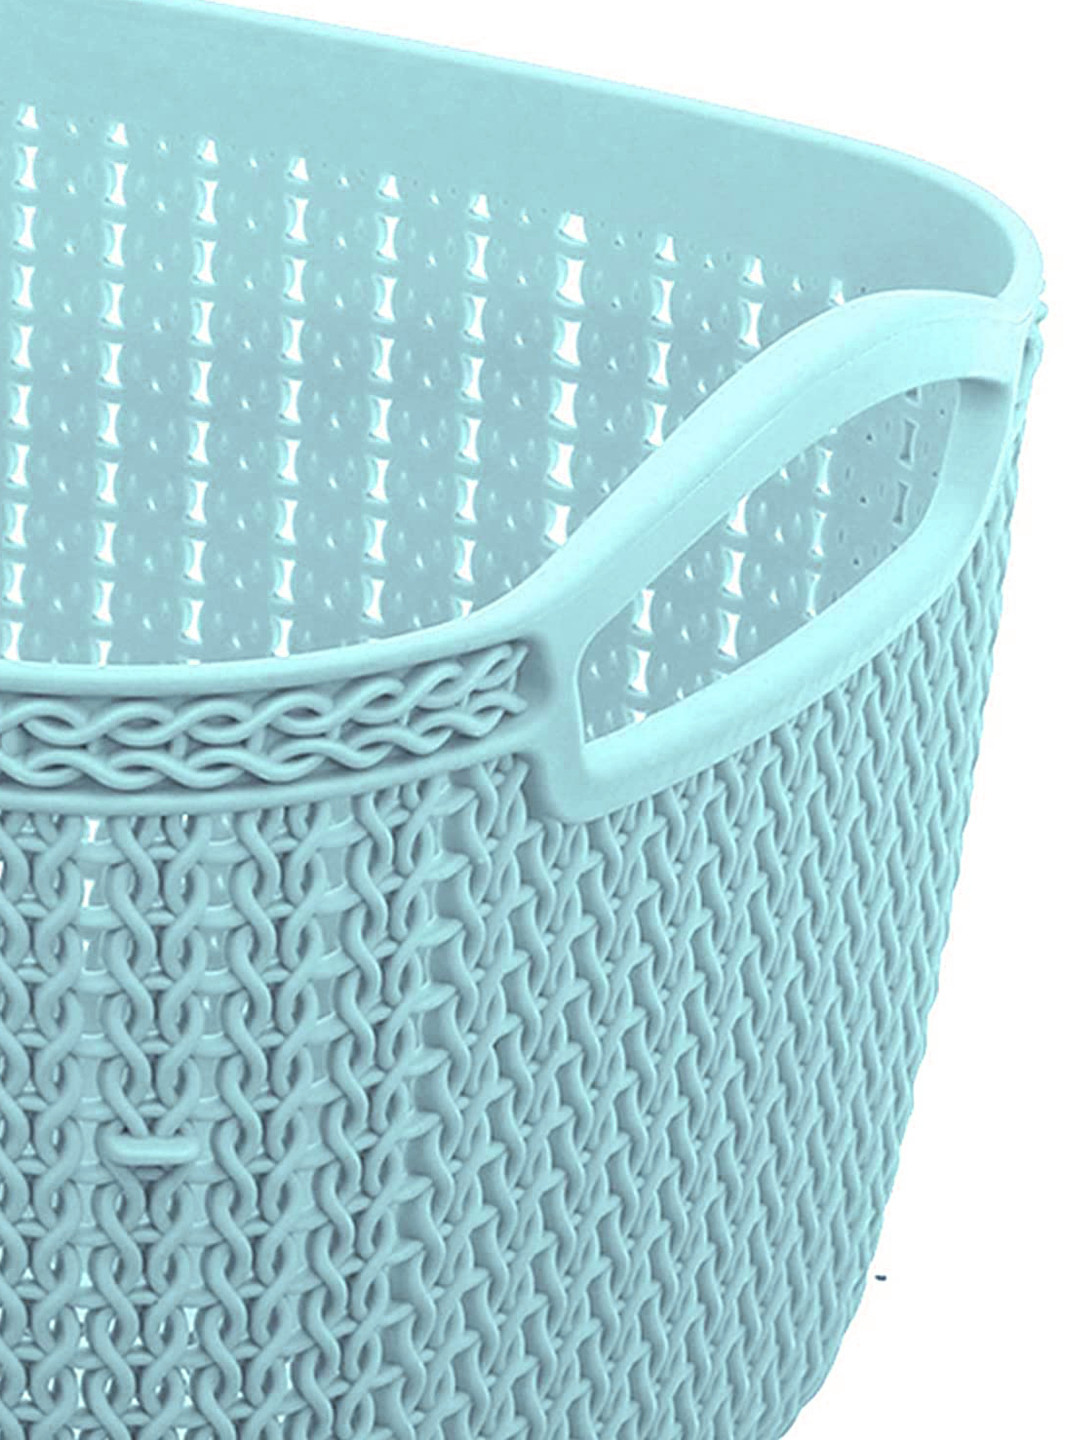 Kuber Industries Q-6 Unbreakable Plastic 3 Pieces Multipurpose Large Size Flexible Storage Baskets/Fruit Vegetable Bathroom Stationary Home Basket with Handles (Light Green & Light Blue & Grey)